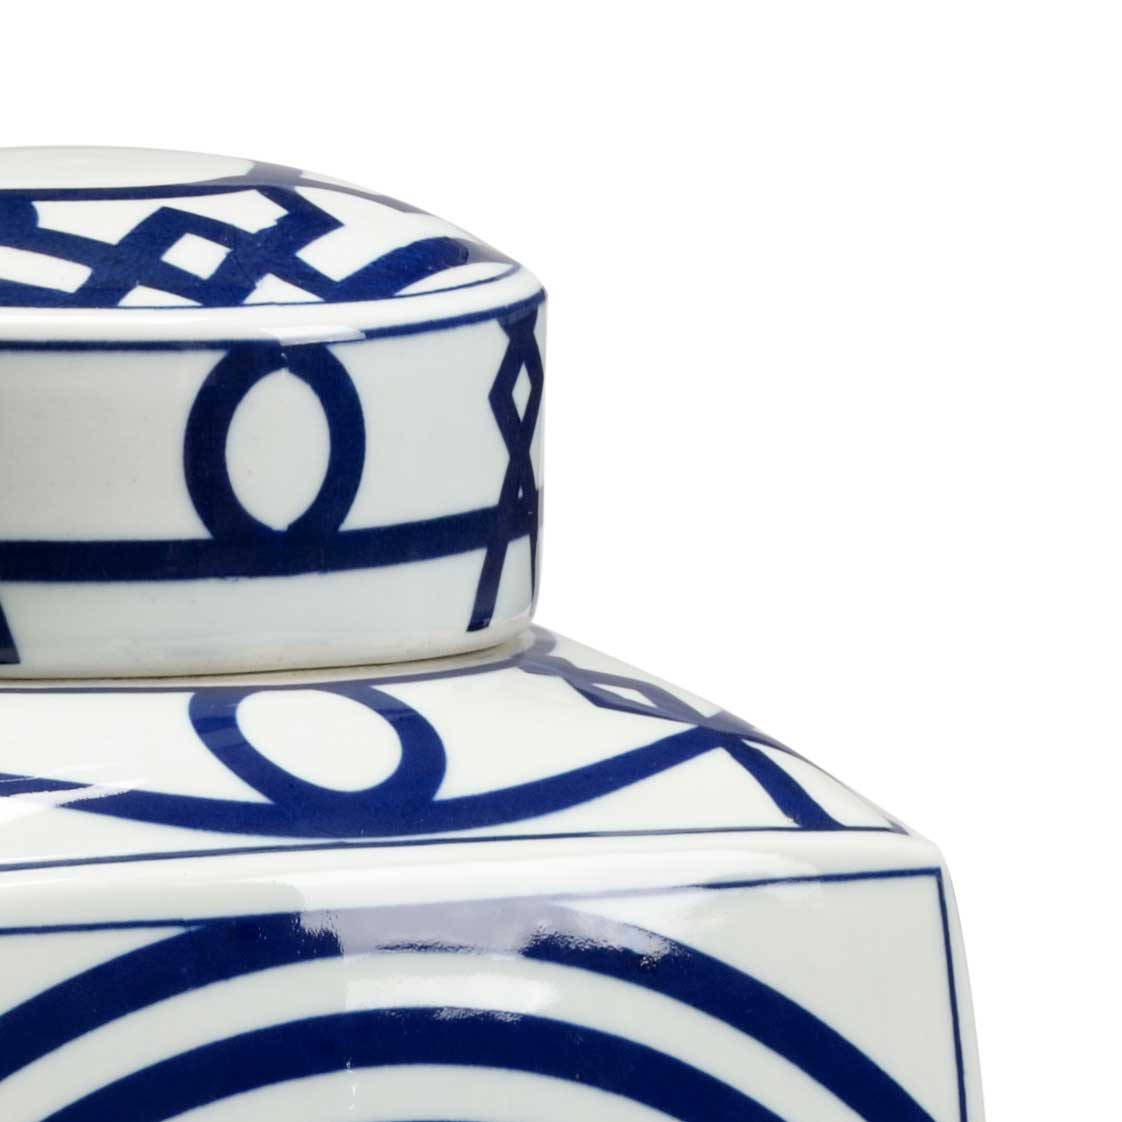 Hobbs Blue Vase Ceramic Blue and White Geometric Design Home Decor Detail Image